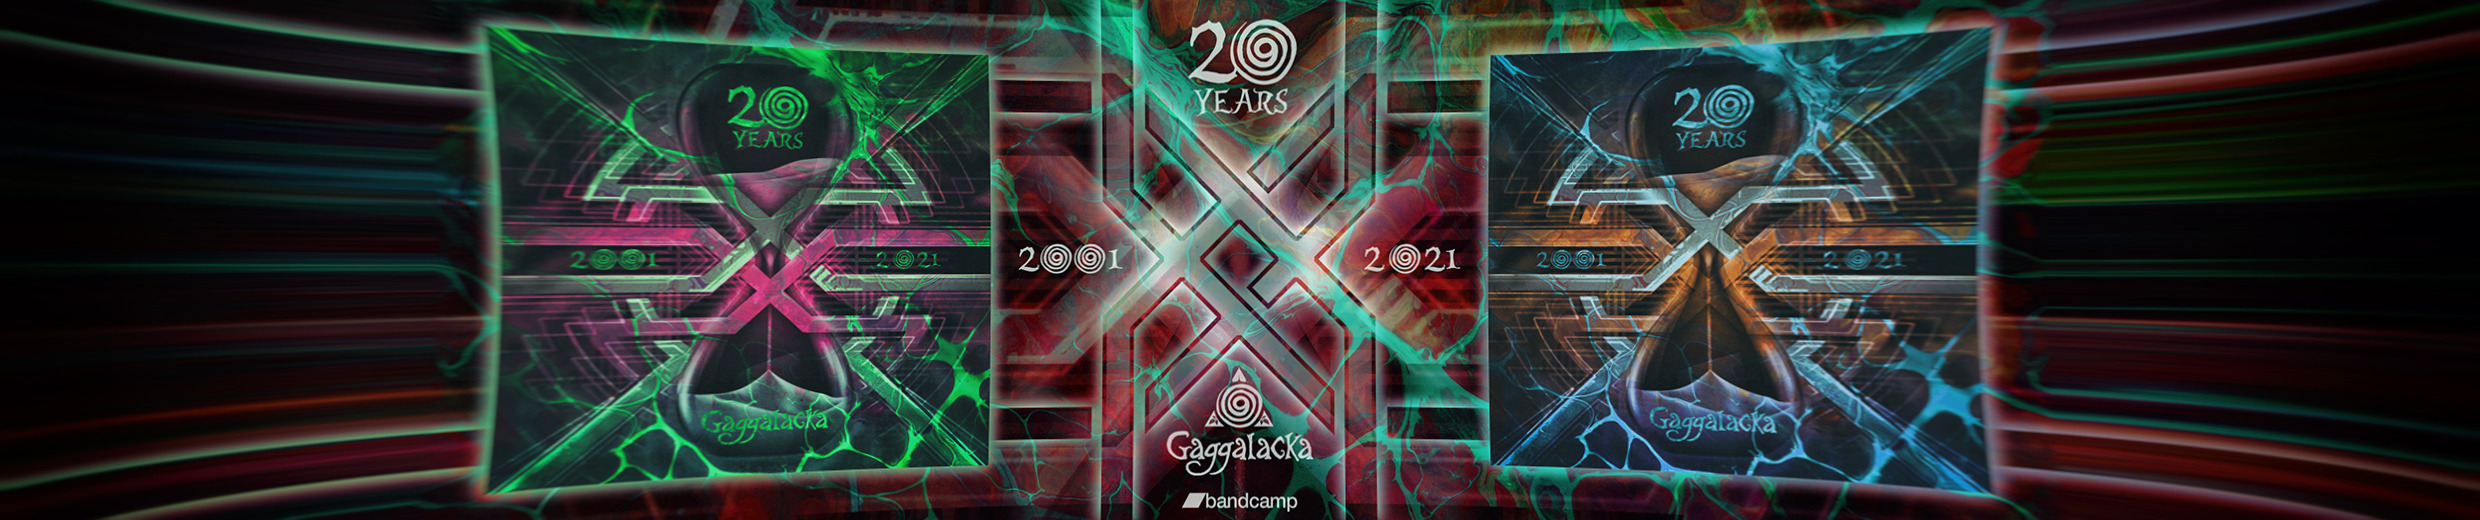 20 Years Gaggalacka Compilation